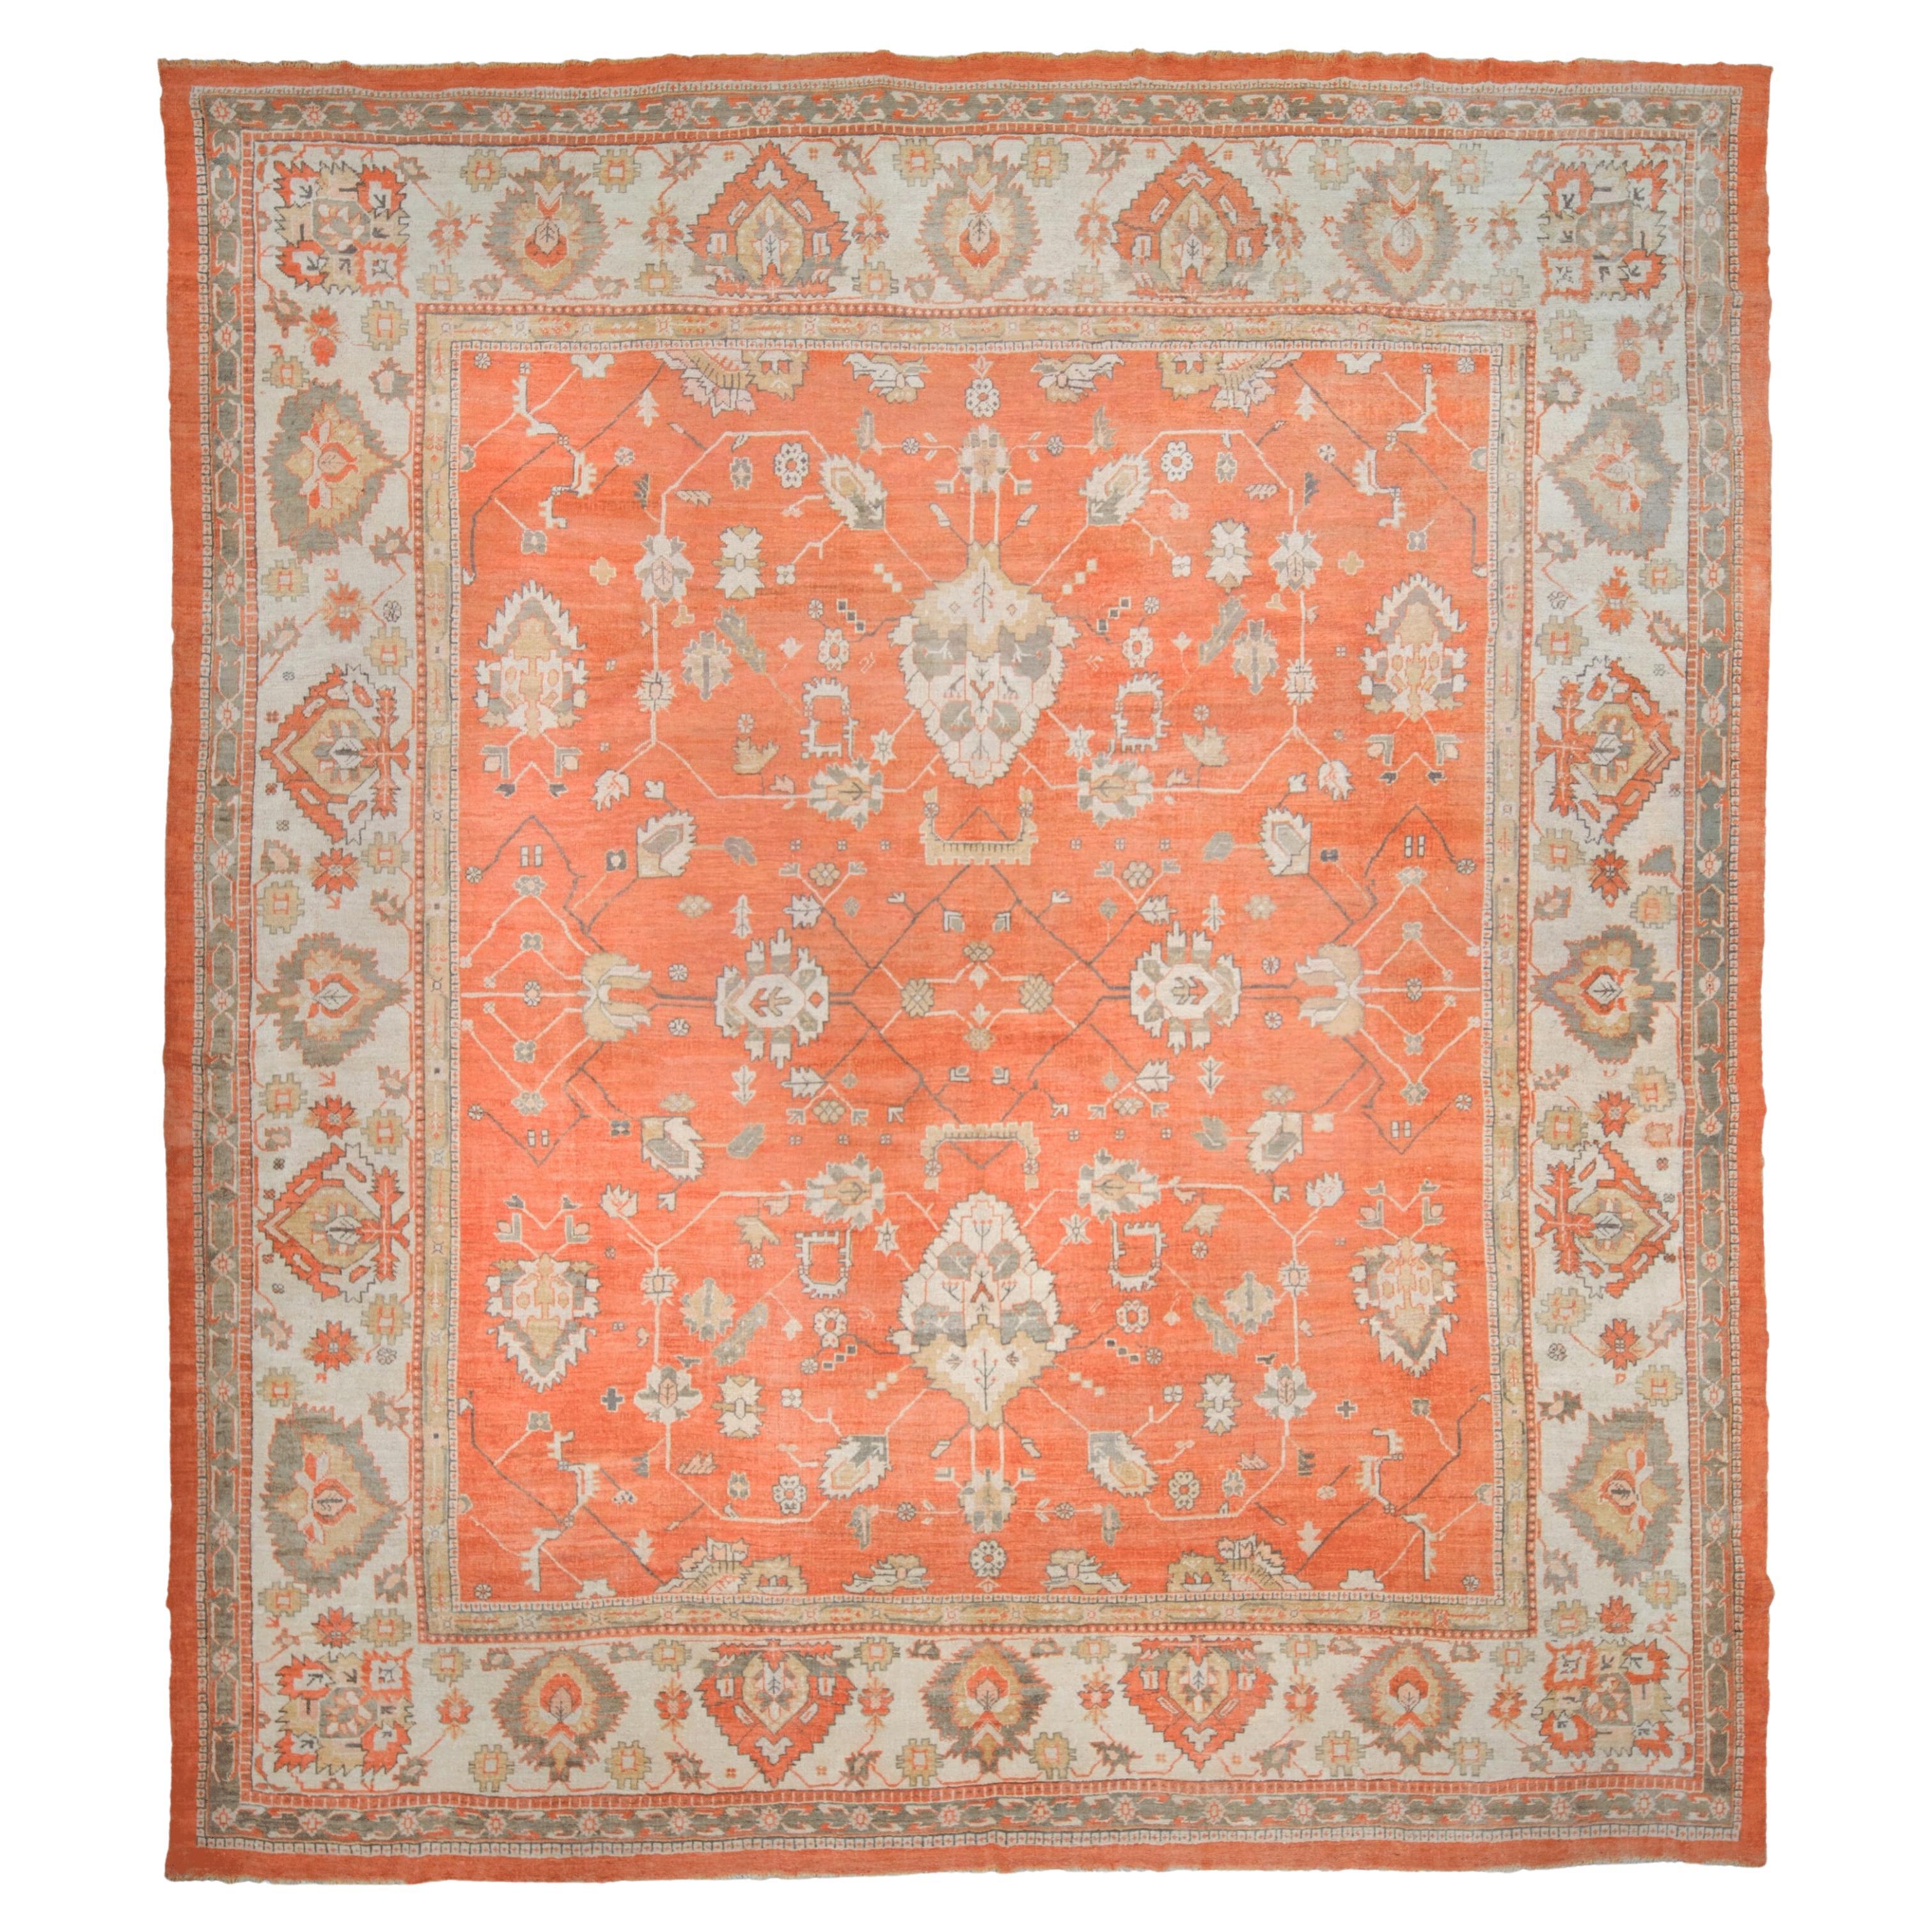 Late of 19th Century Ushak Carpet - Antique Anatolian Carpet